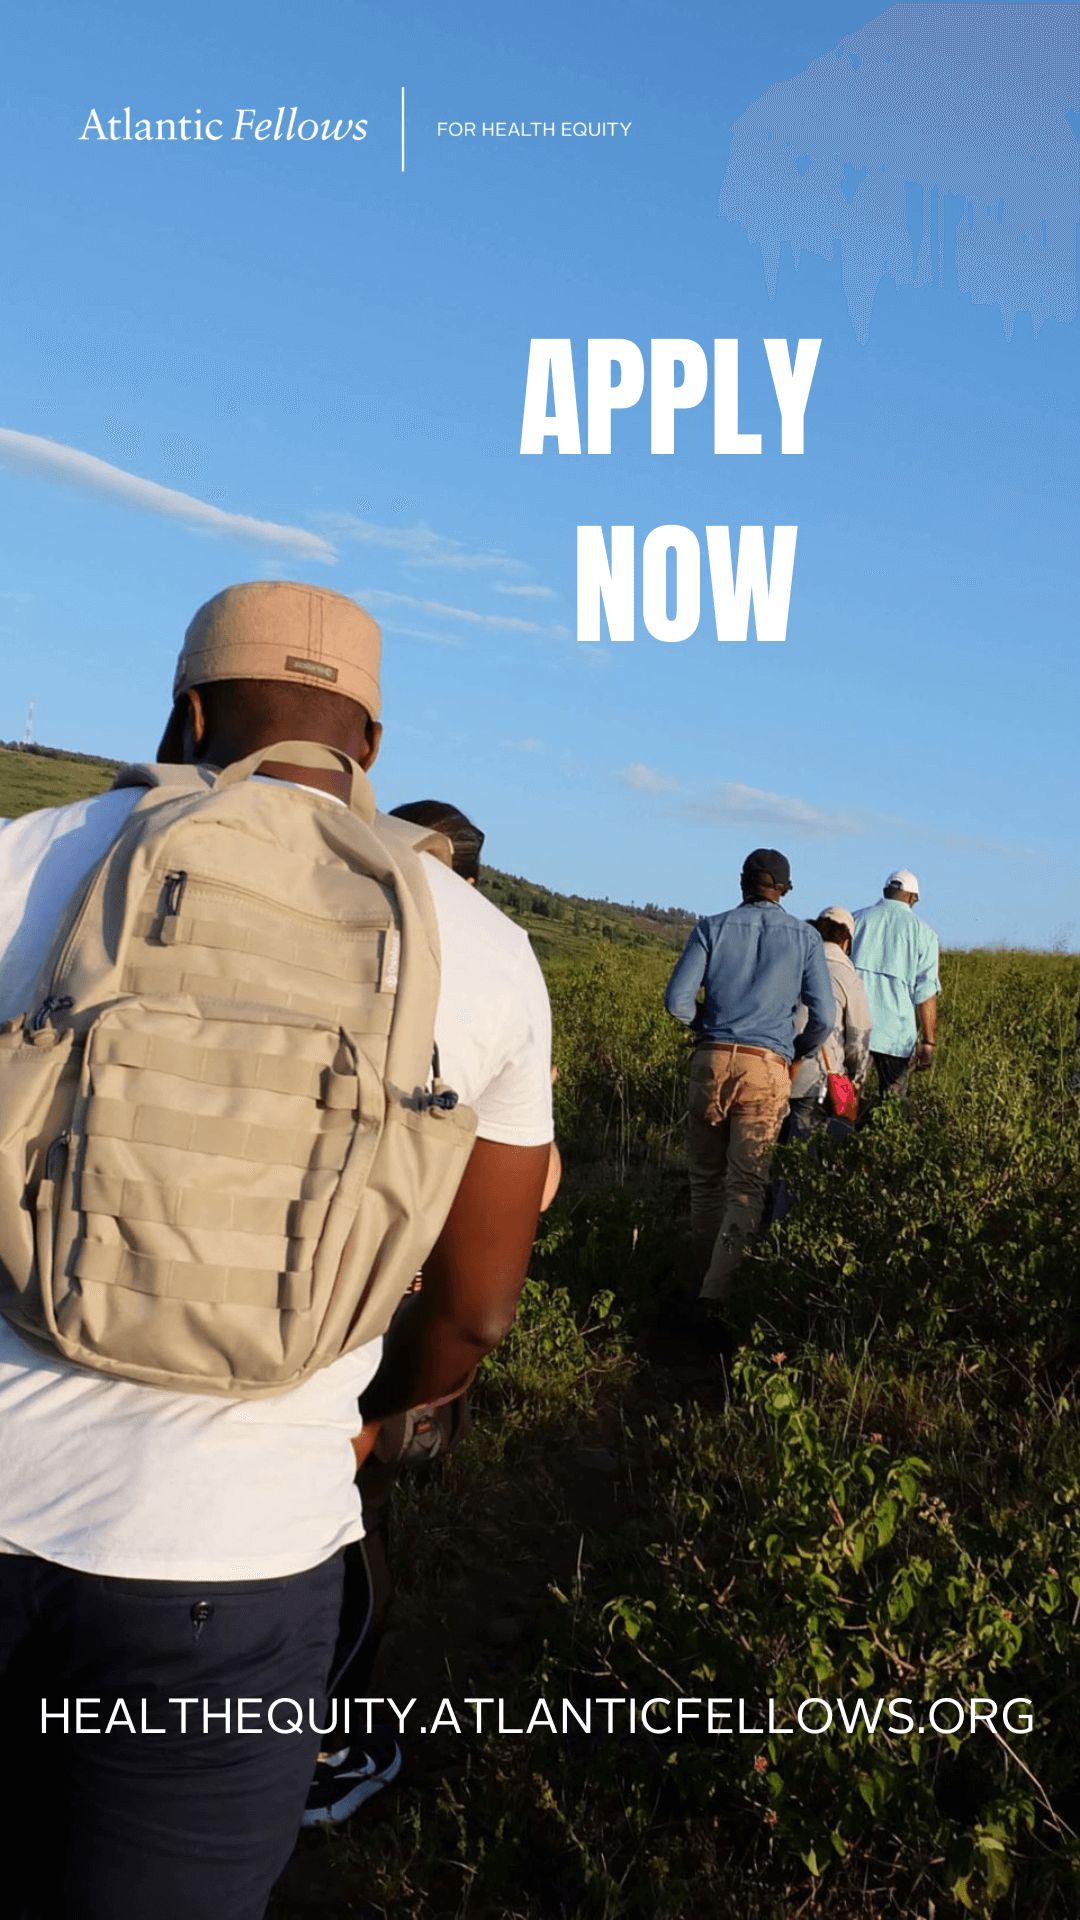 Group of people walking in a field - apply now